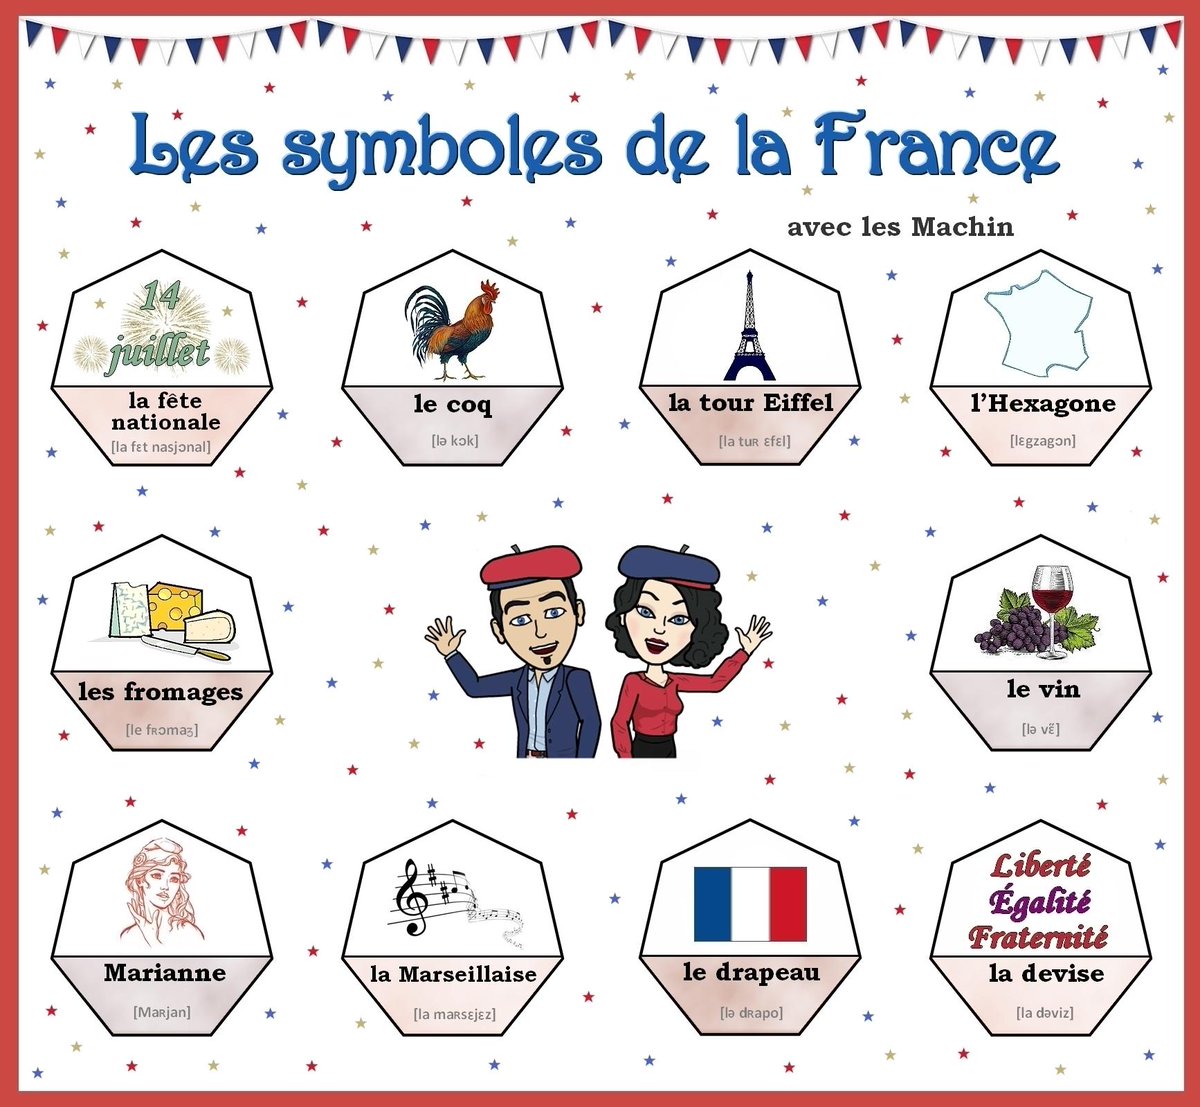 Basic words: #FrenchSymbols!  
🇫🇷🇫🇷🇫🇷  
#FrenchNationalDay #14juillet 
#FLE #edutwitter #BastilleDay 
#fêtenationale #14Juillet2019